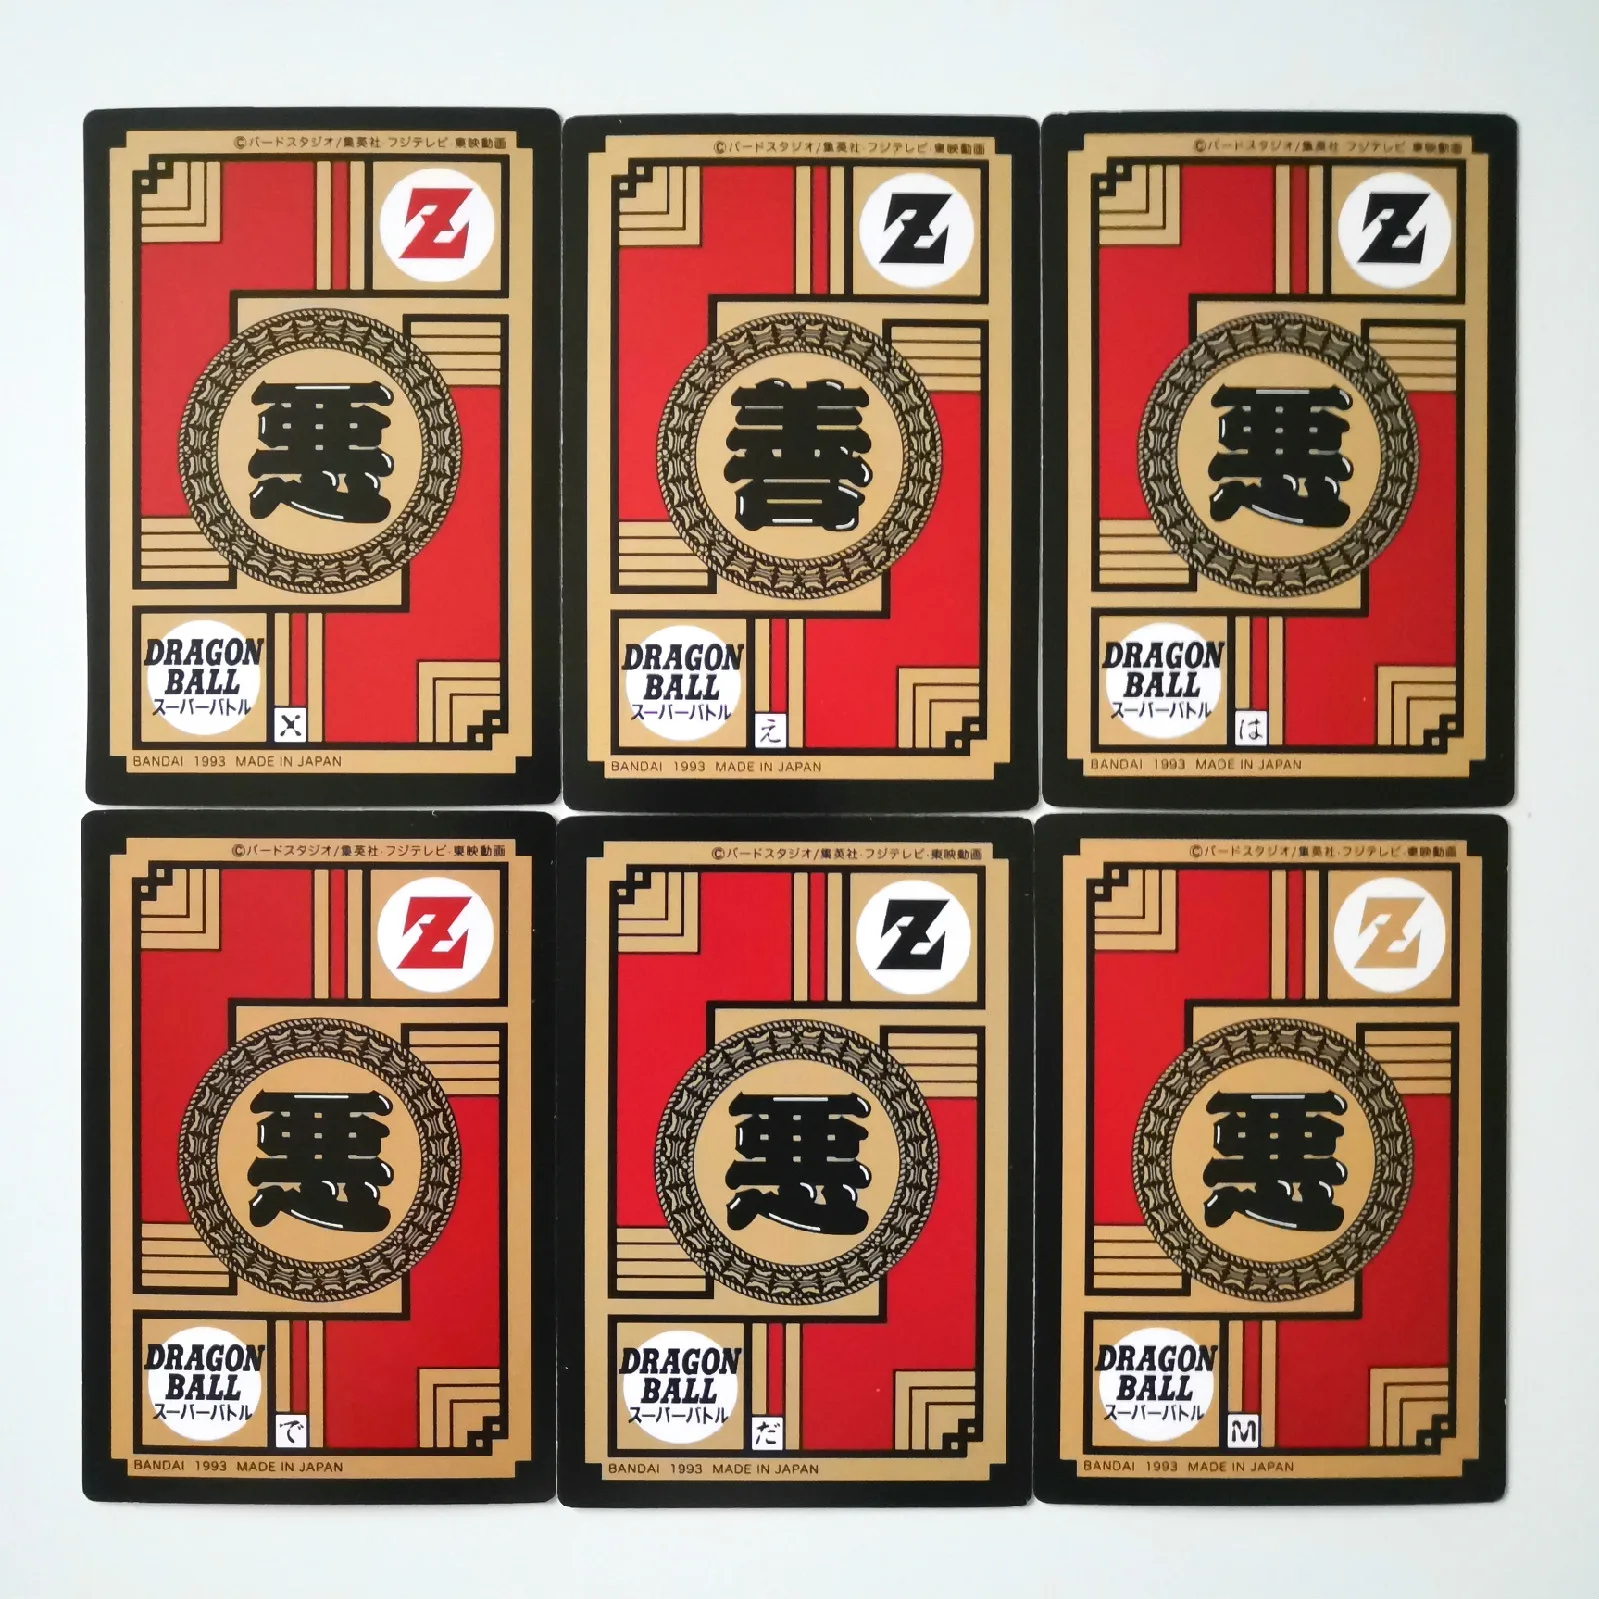 43 шт./компл. супер Dragon Ball-Z Fighting 2 Reissue Heroes batch Card Ultra Instinct Goku Vegeta игровая коллекция карт